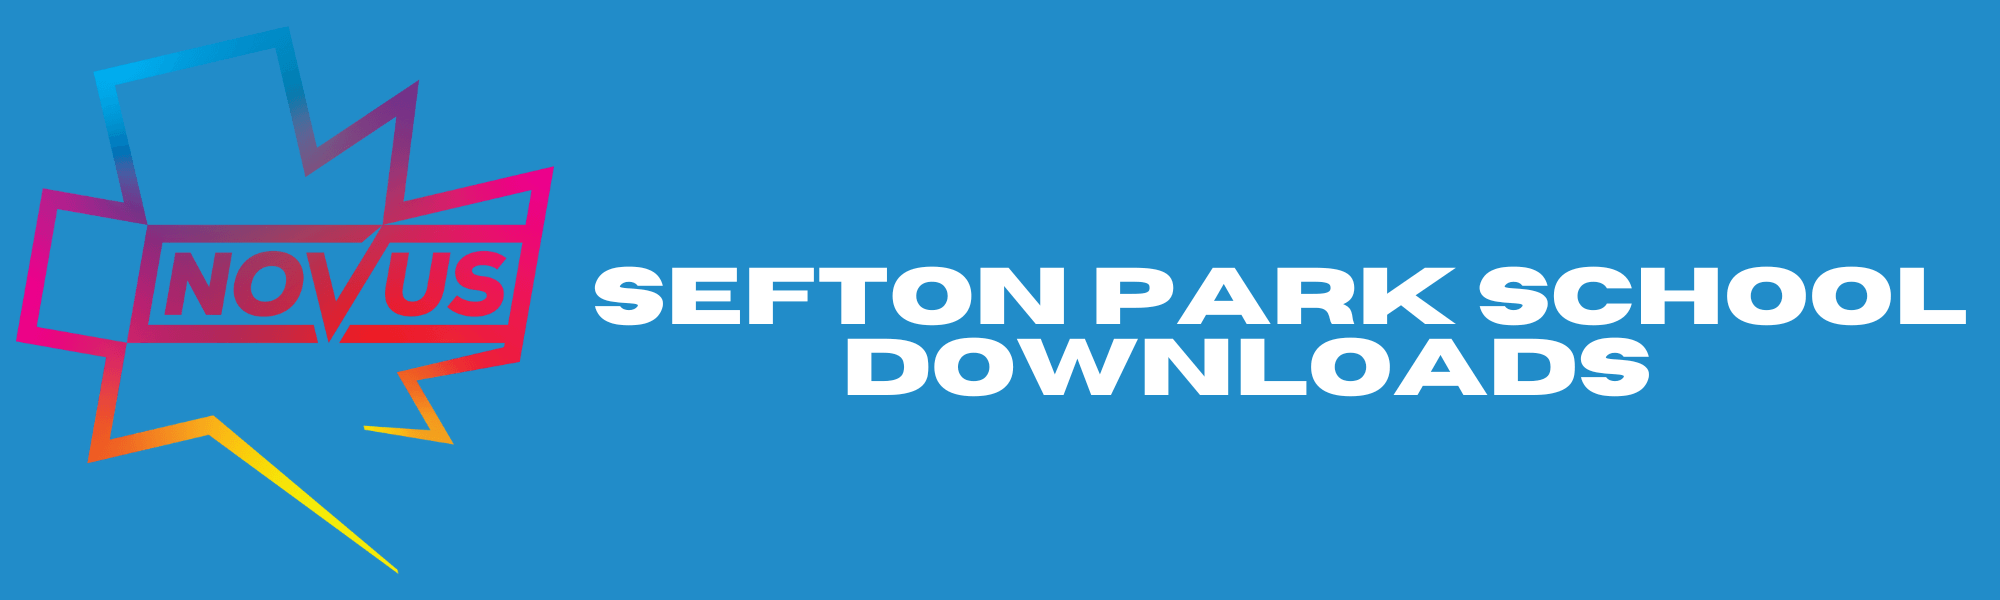 Sefton Park School Download Banner